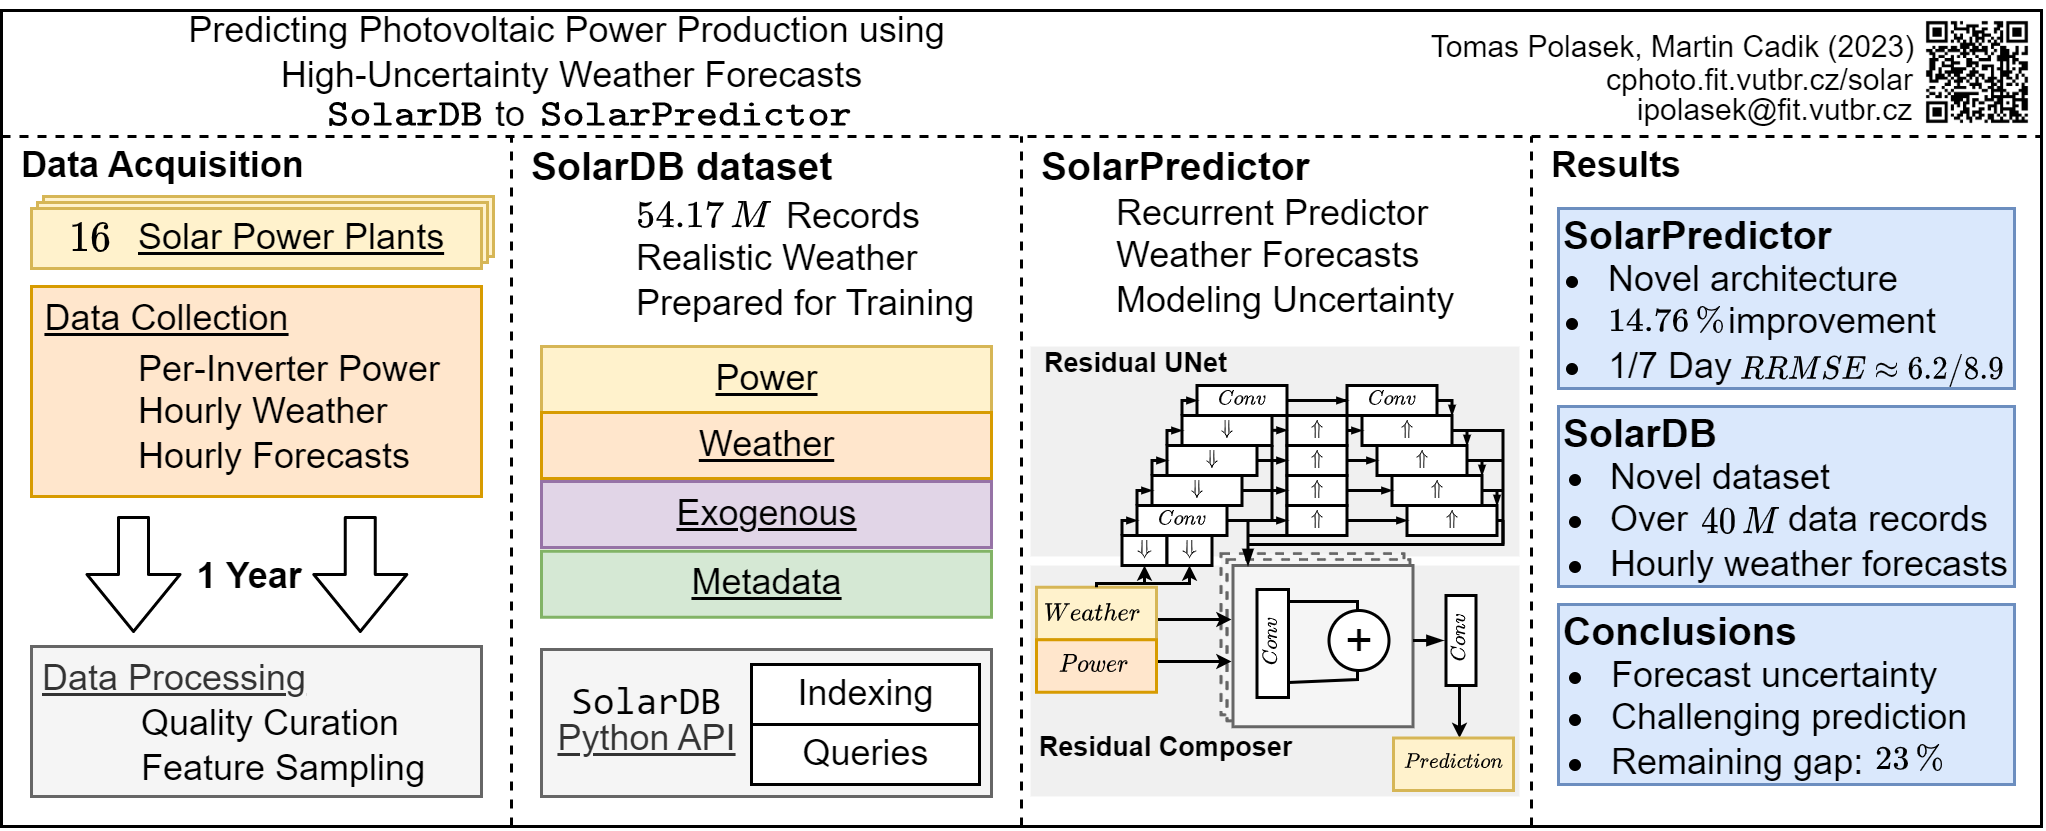 SolarDB to SolarPredictor